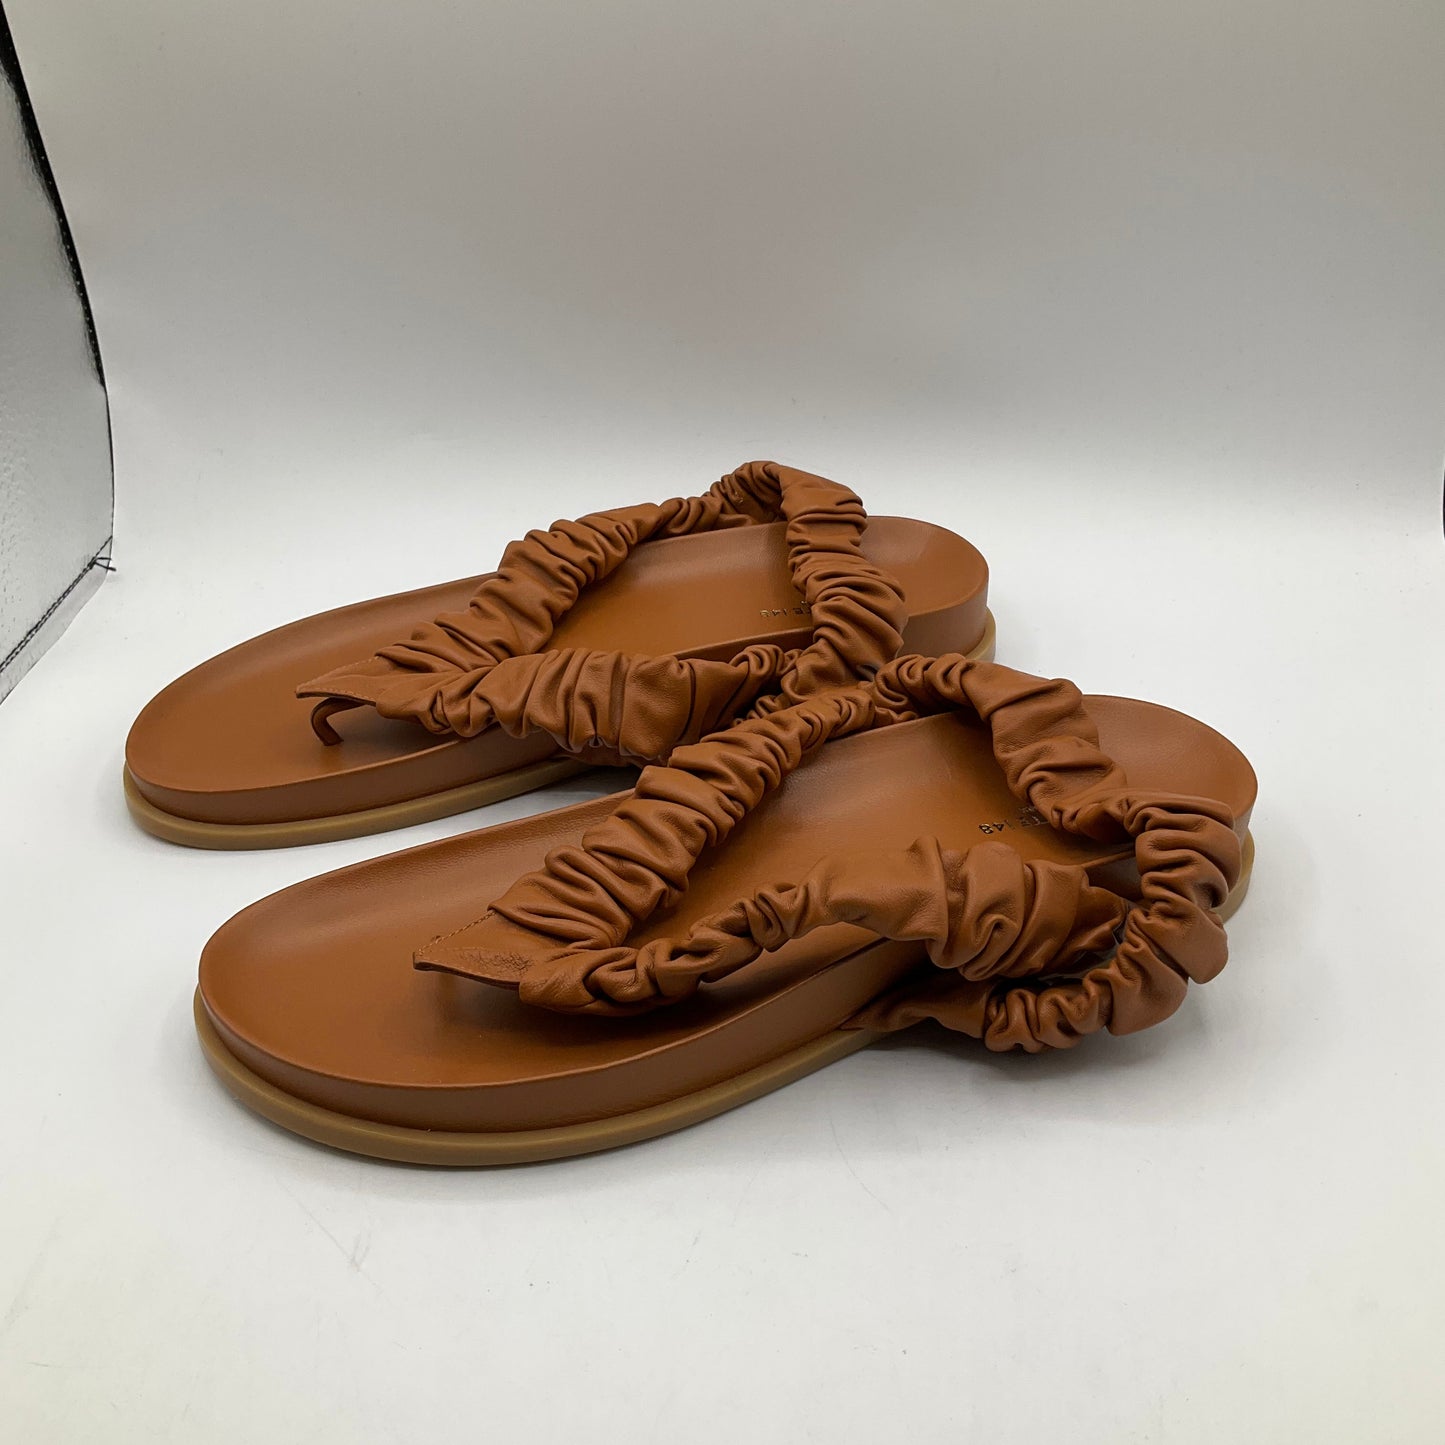 Sandals Flats By Lafayette 148  Size: 8.5